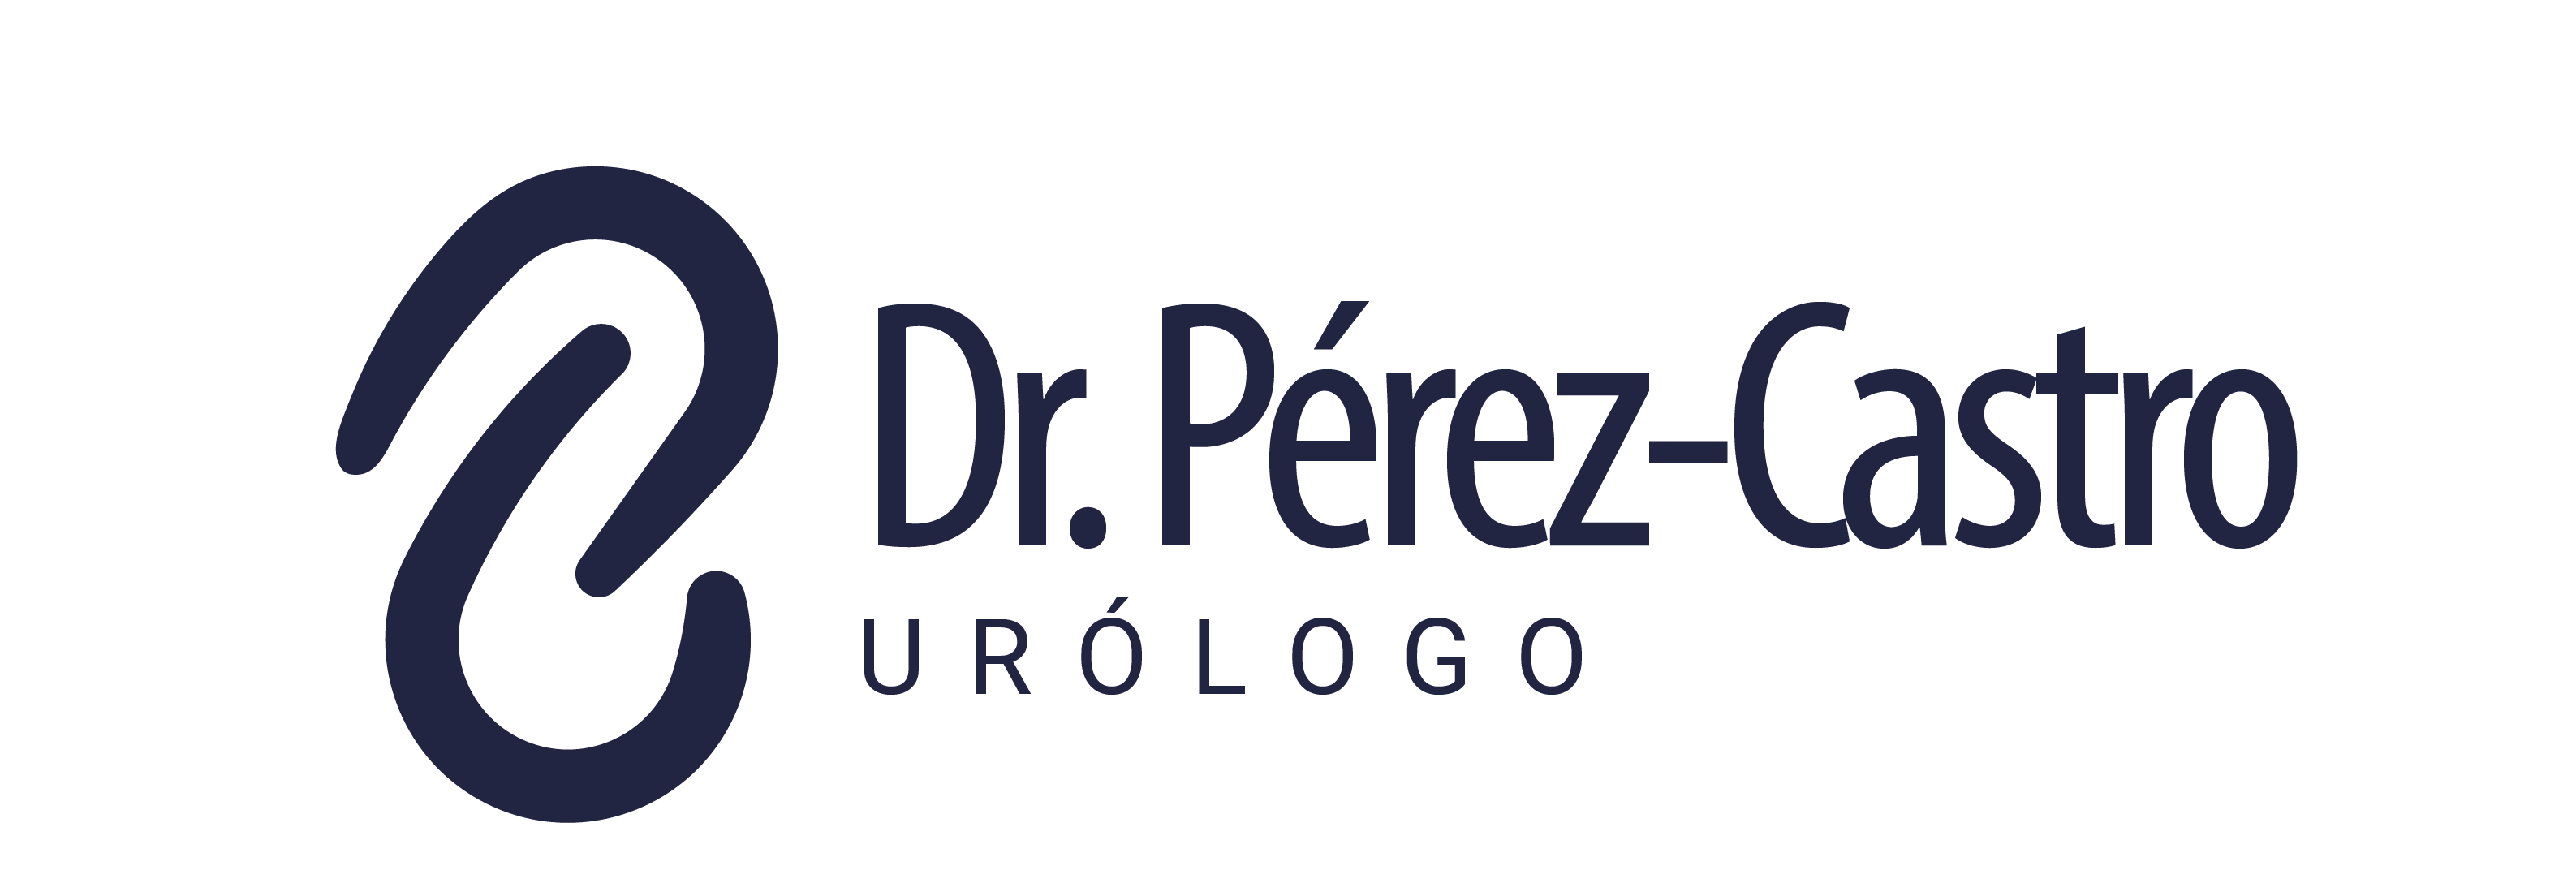 Dr Perez Castro